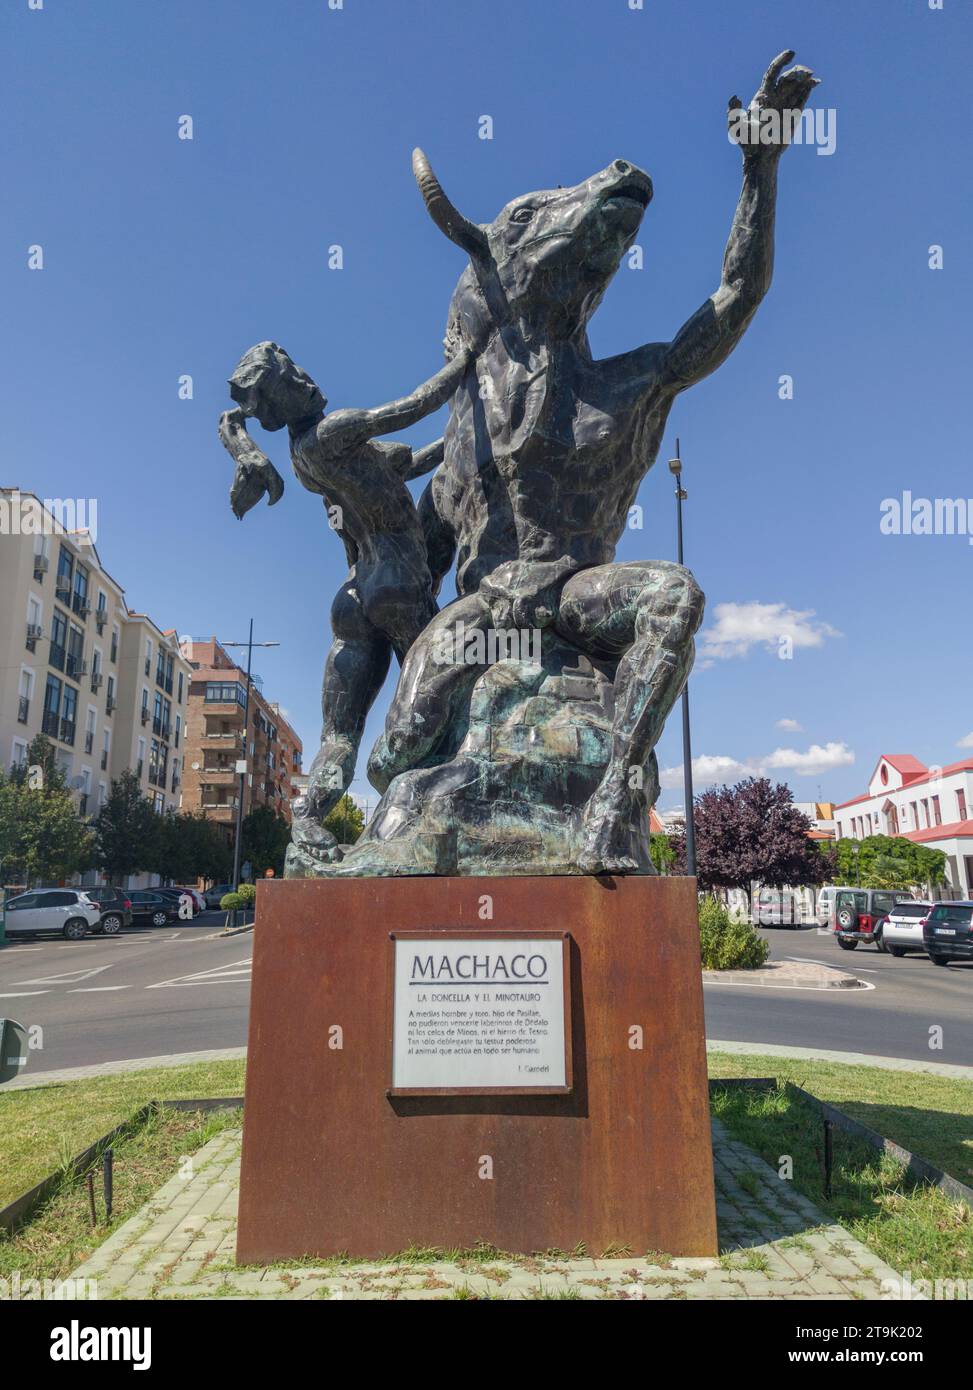 Coria, Spain - Sept 2nd, 2023: The Maiden and the Minotaur sculpture, by Jesus Diaz Moreno Machaco, Coria, Spain Stock Photo